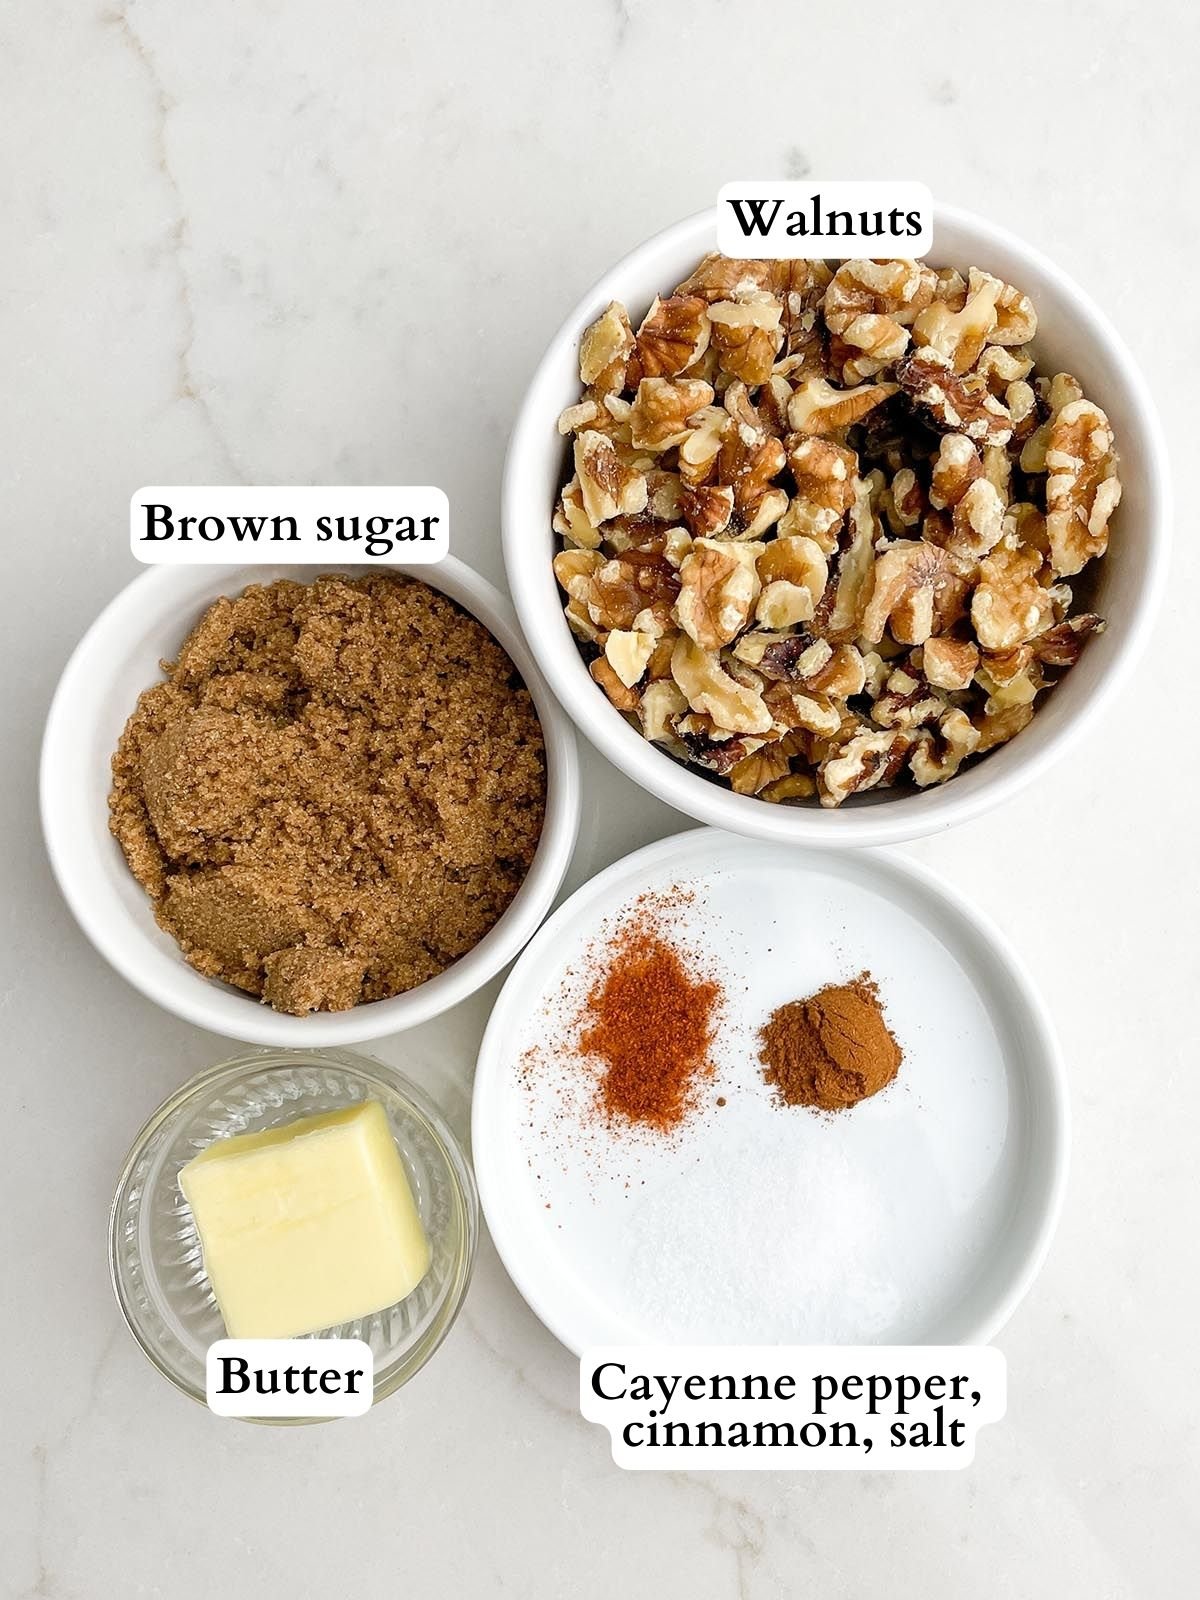 brown sugar candied walnuts ingredients.